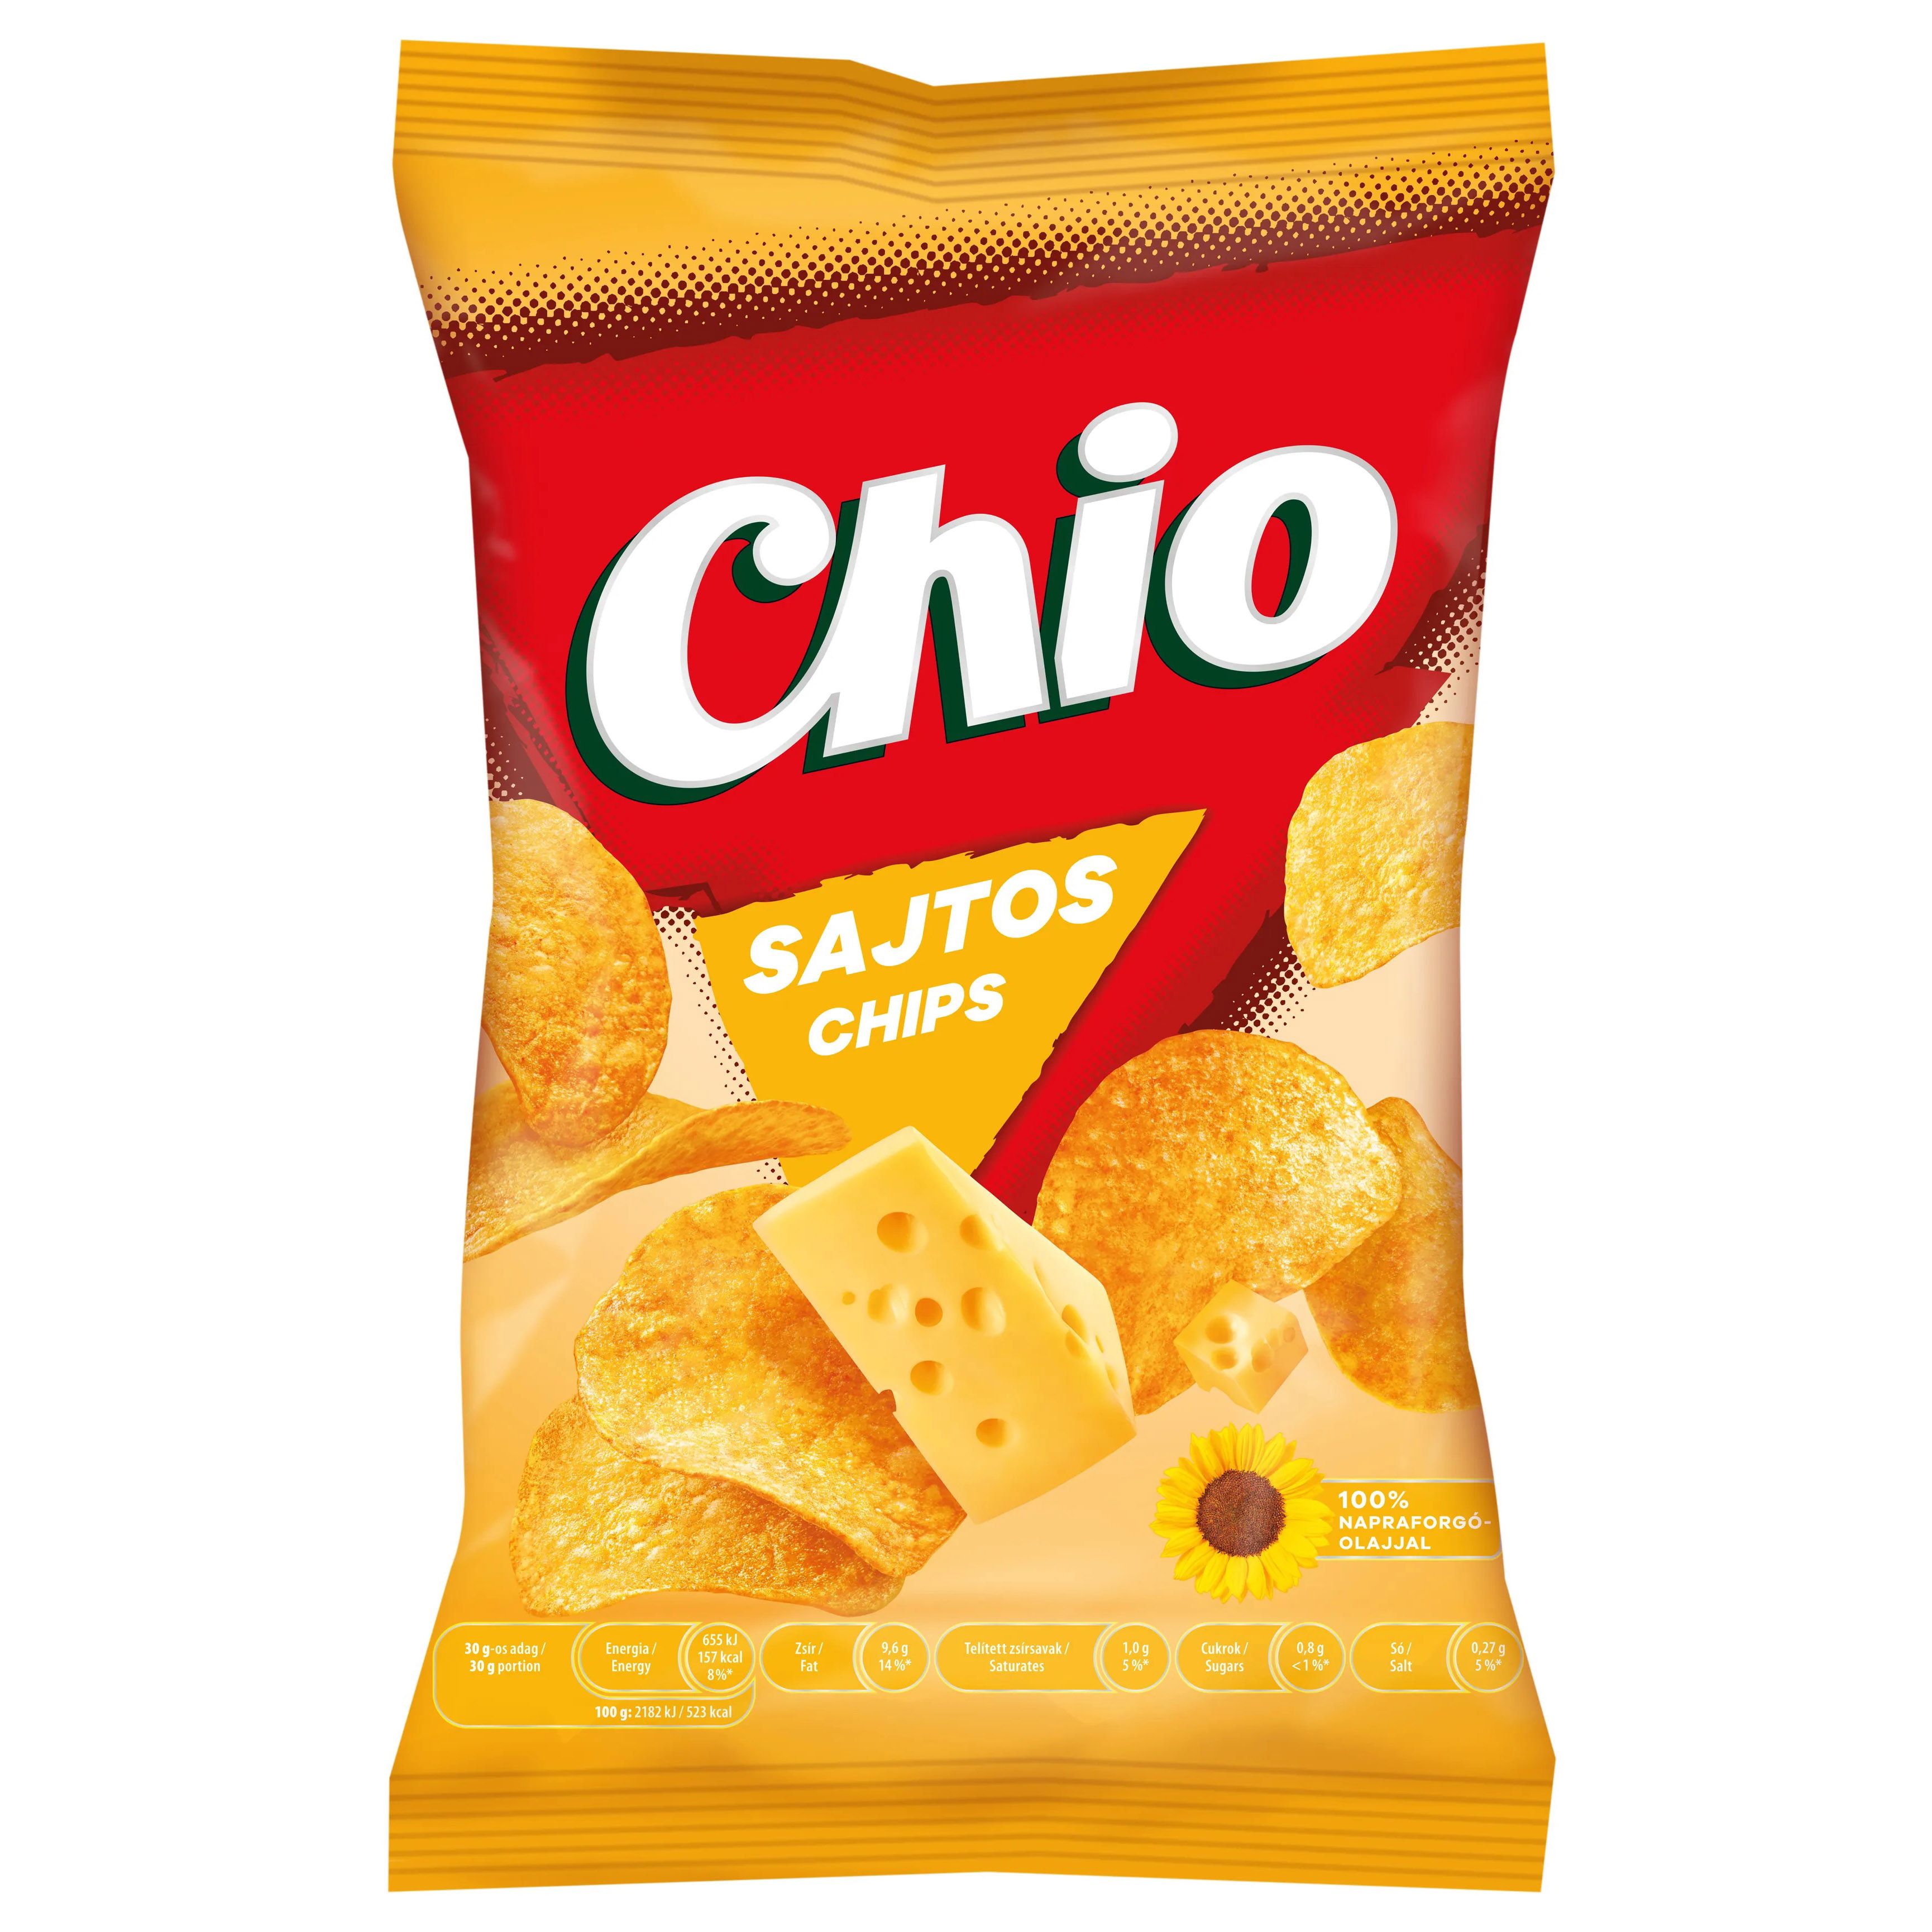 Chio Chips 70g Sajtos